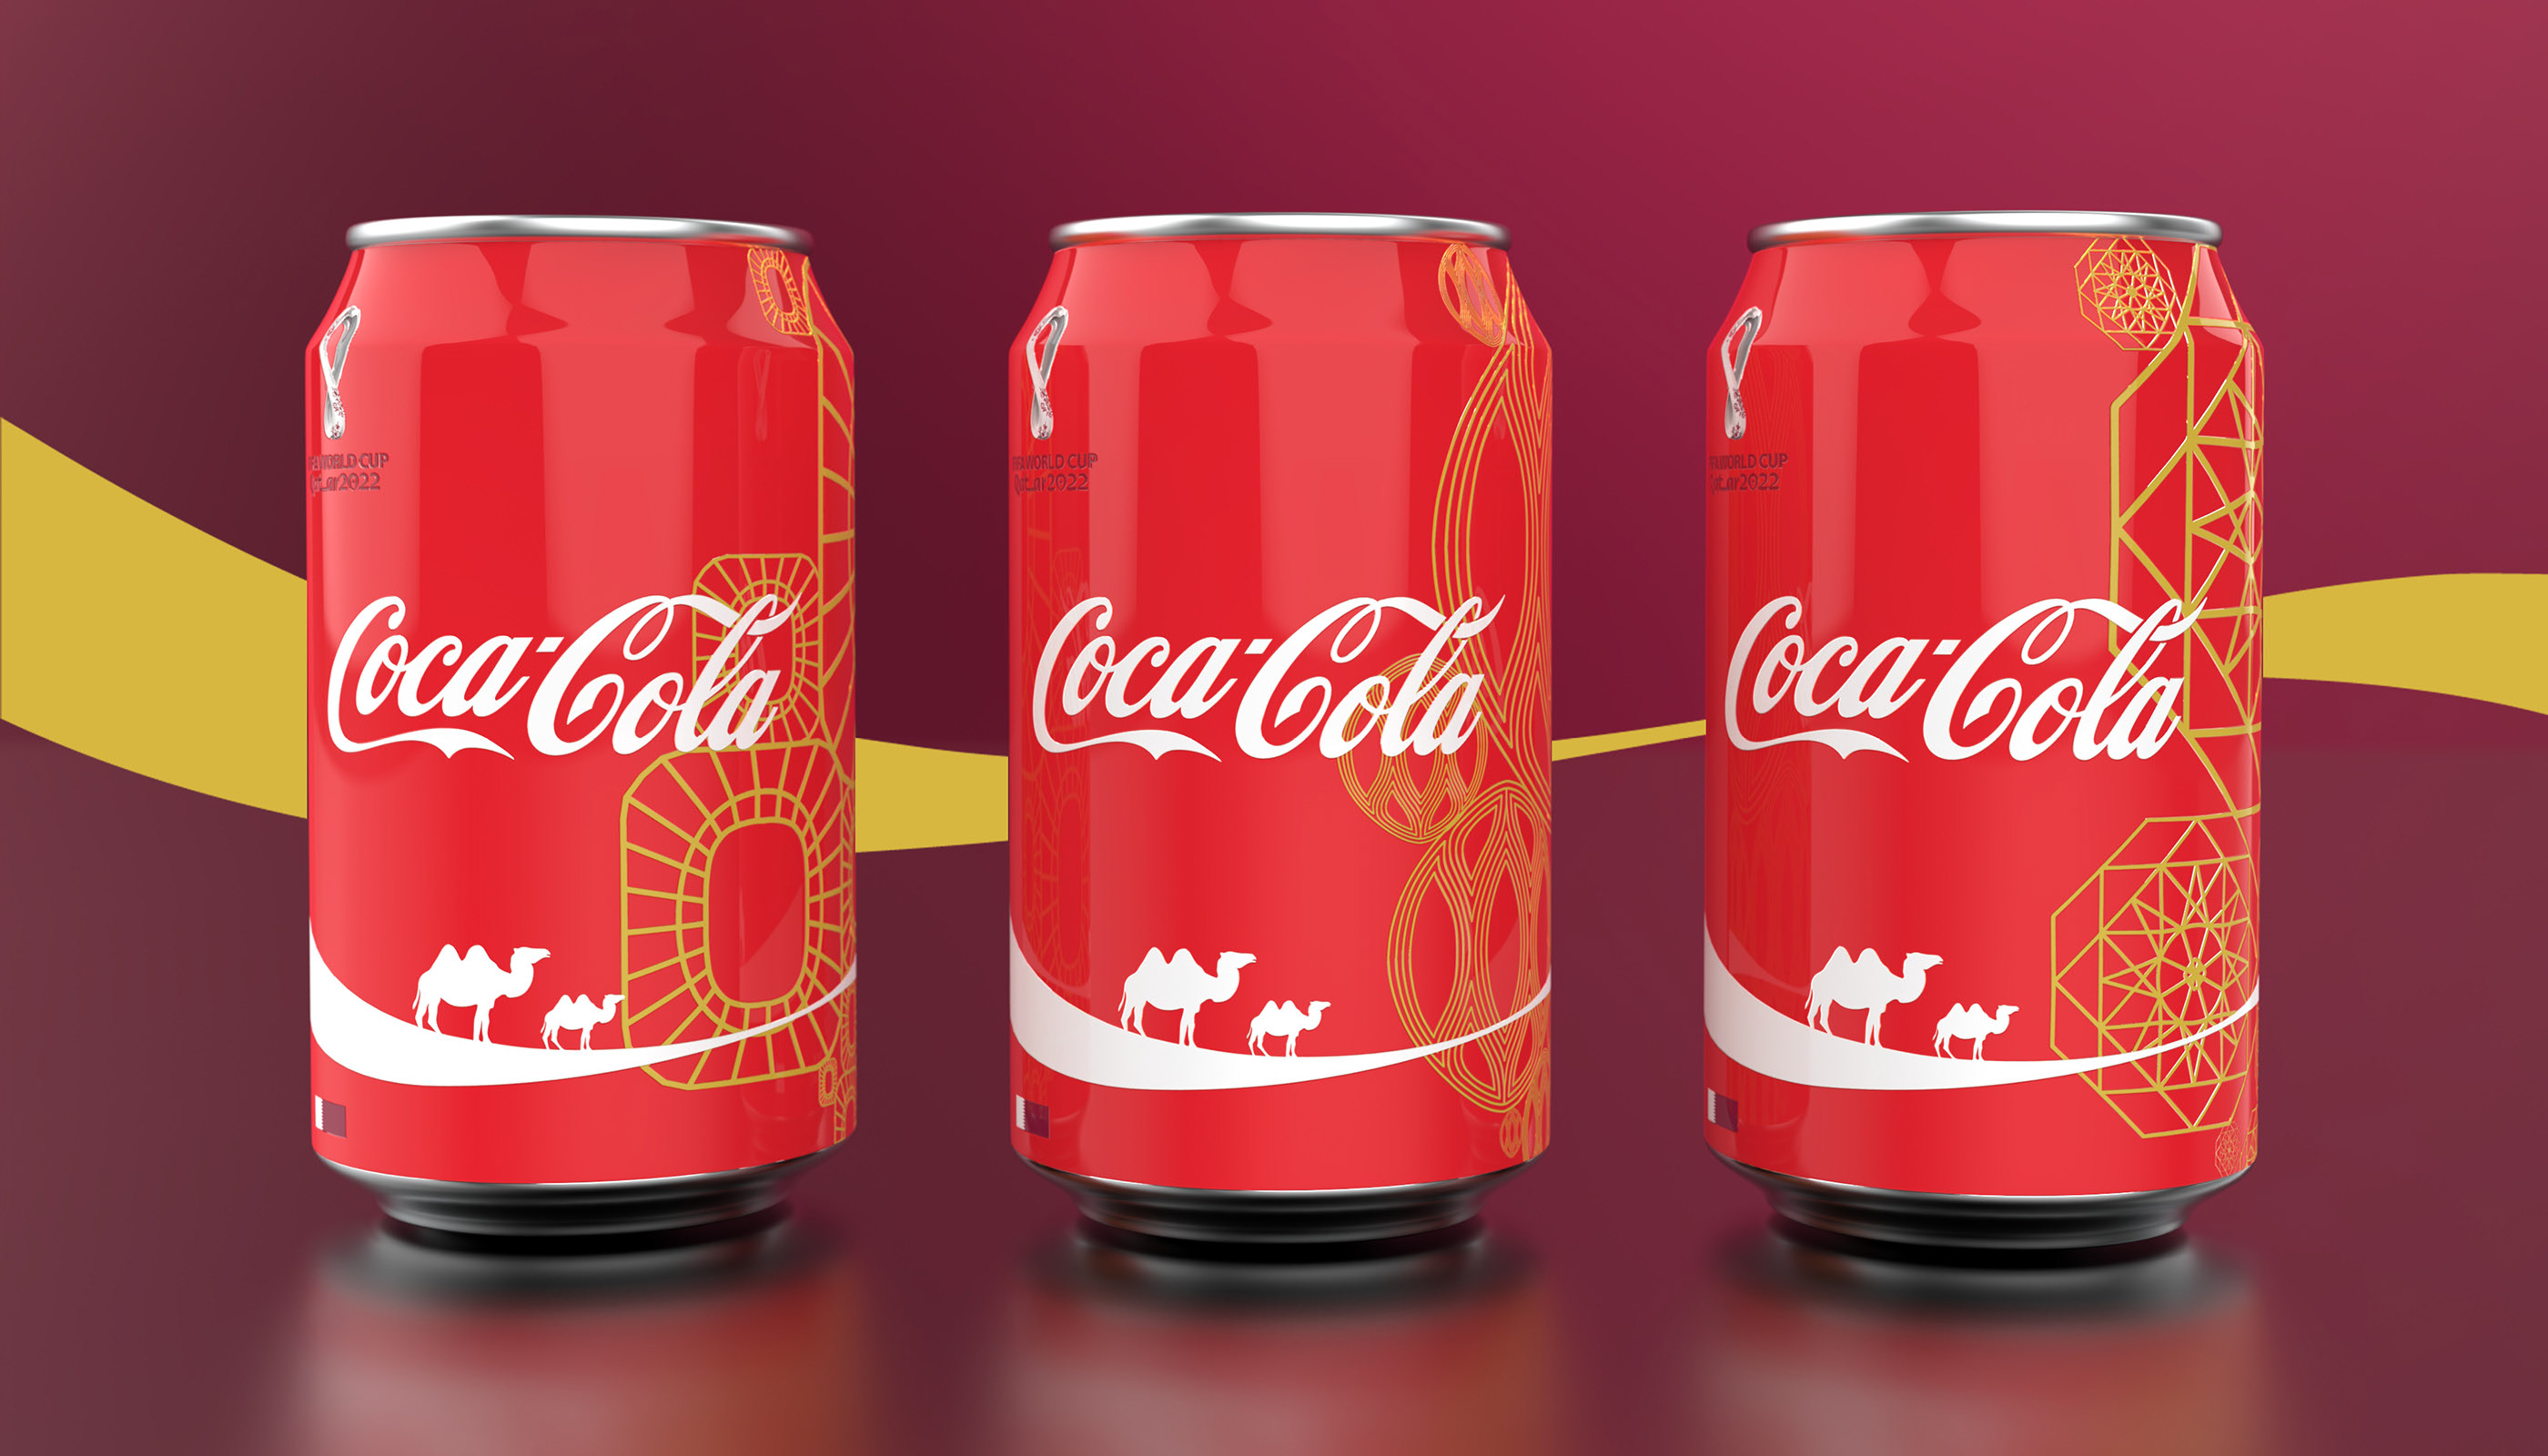 Coca-Cola Packaging | Qatar Fifa World Cup 2022 on Behance